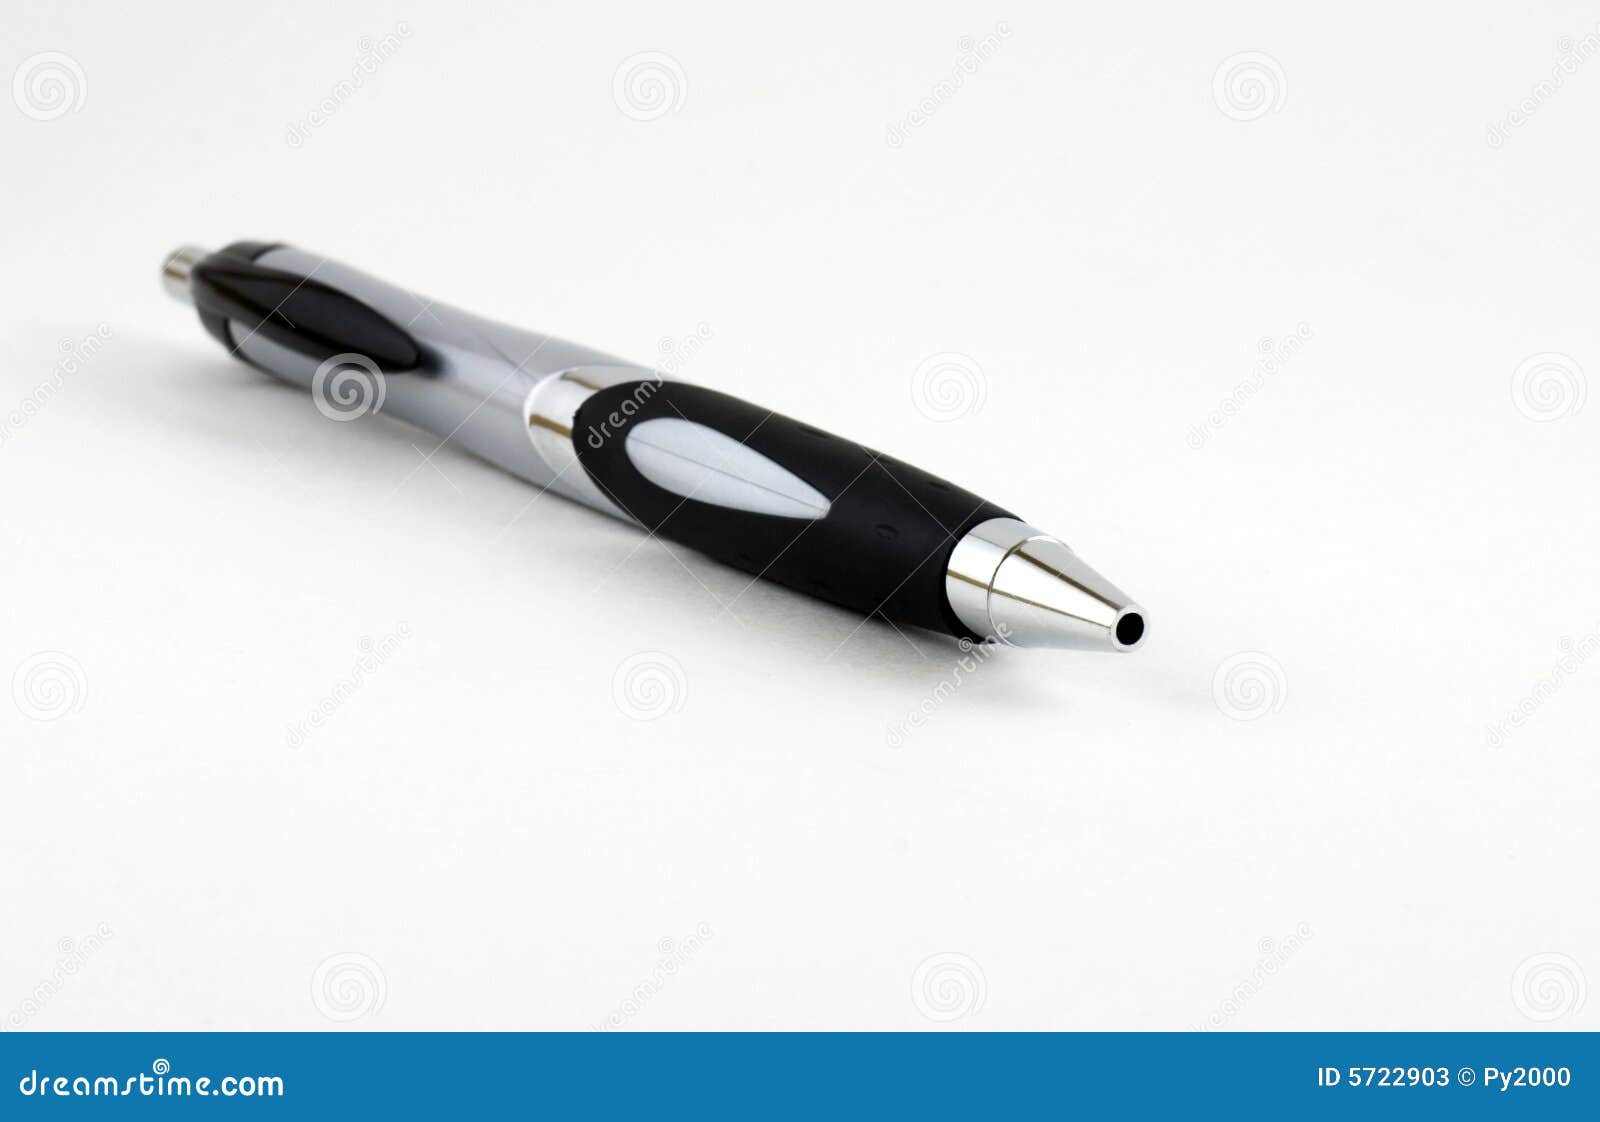 silver and black ballpoint pen